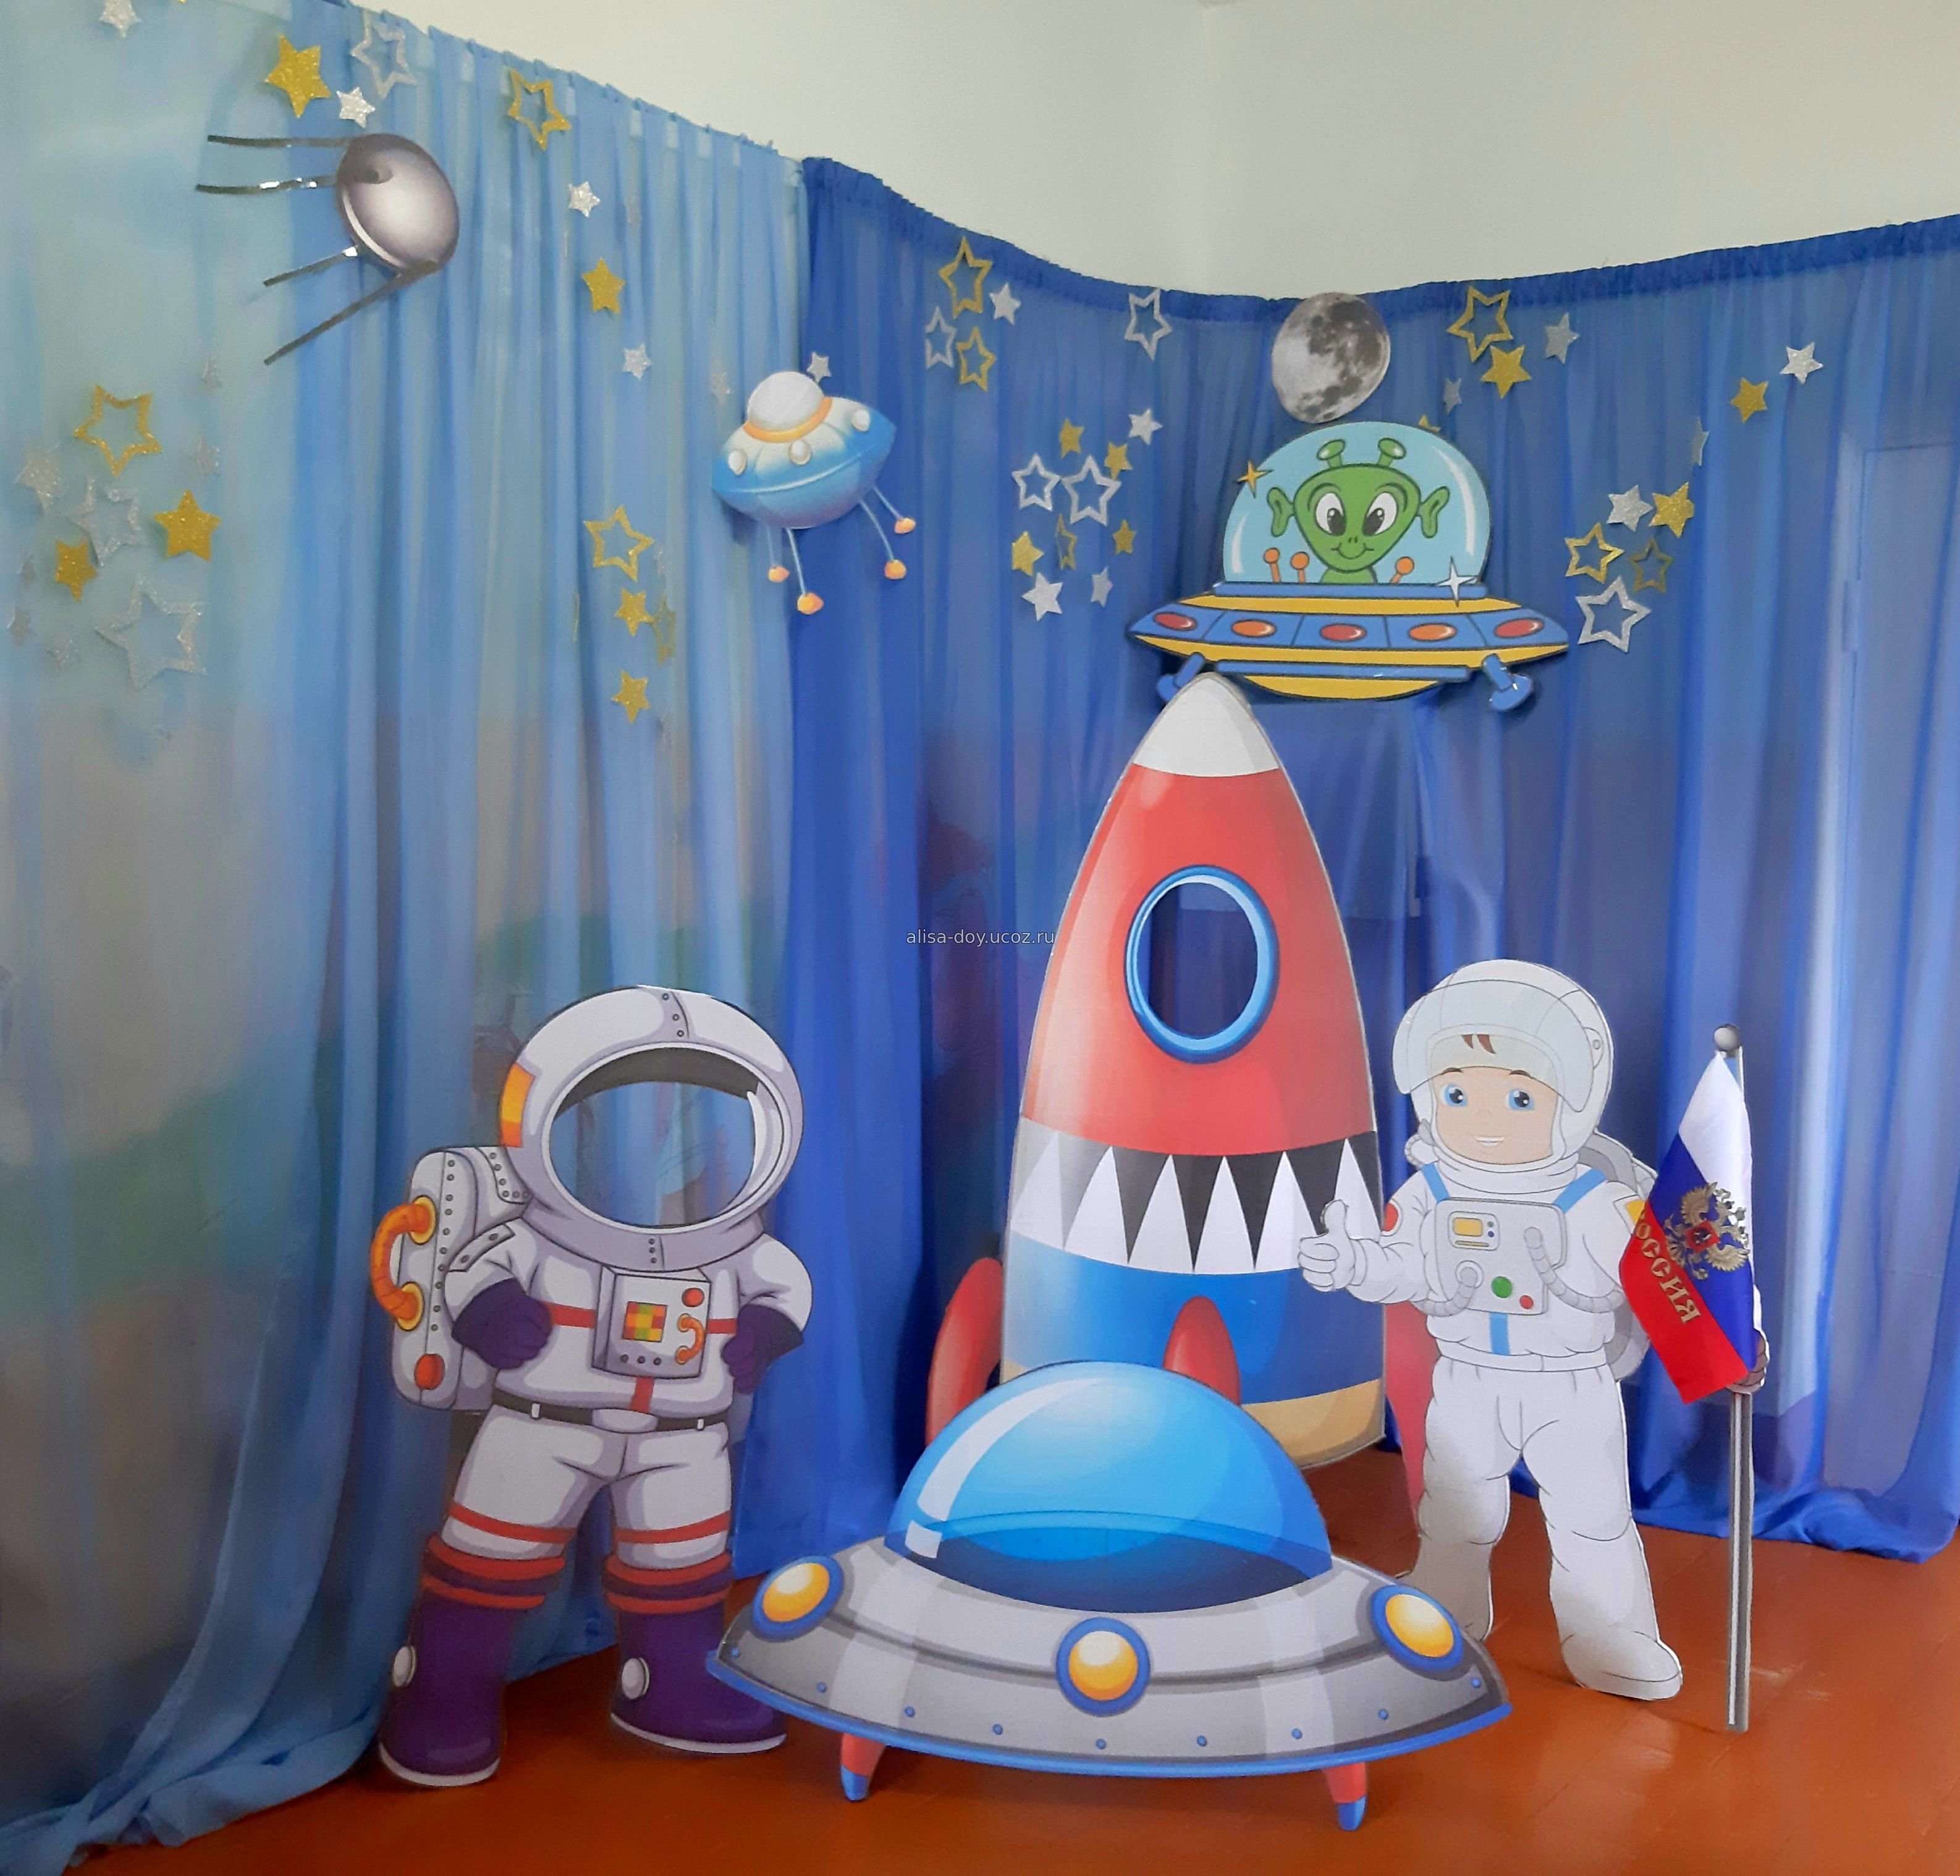 Фотозона ко дню космонавтики в школе. Фотозона на день космонавтики в детском саду. Фотозона космос в детском саду. Фотозона космос для детей в детском саду. Фотозона космос ко Дню космонавтики.